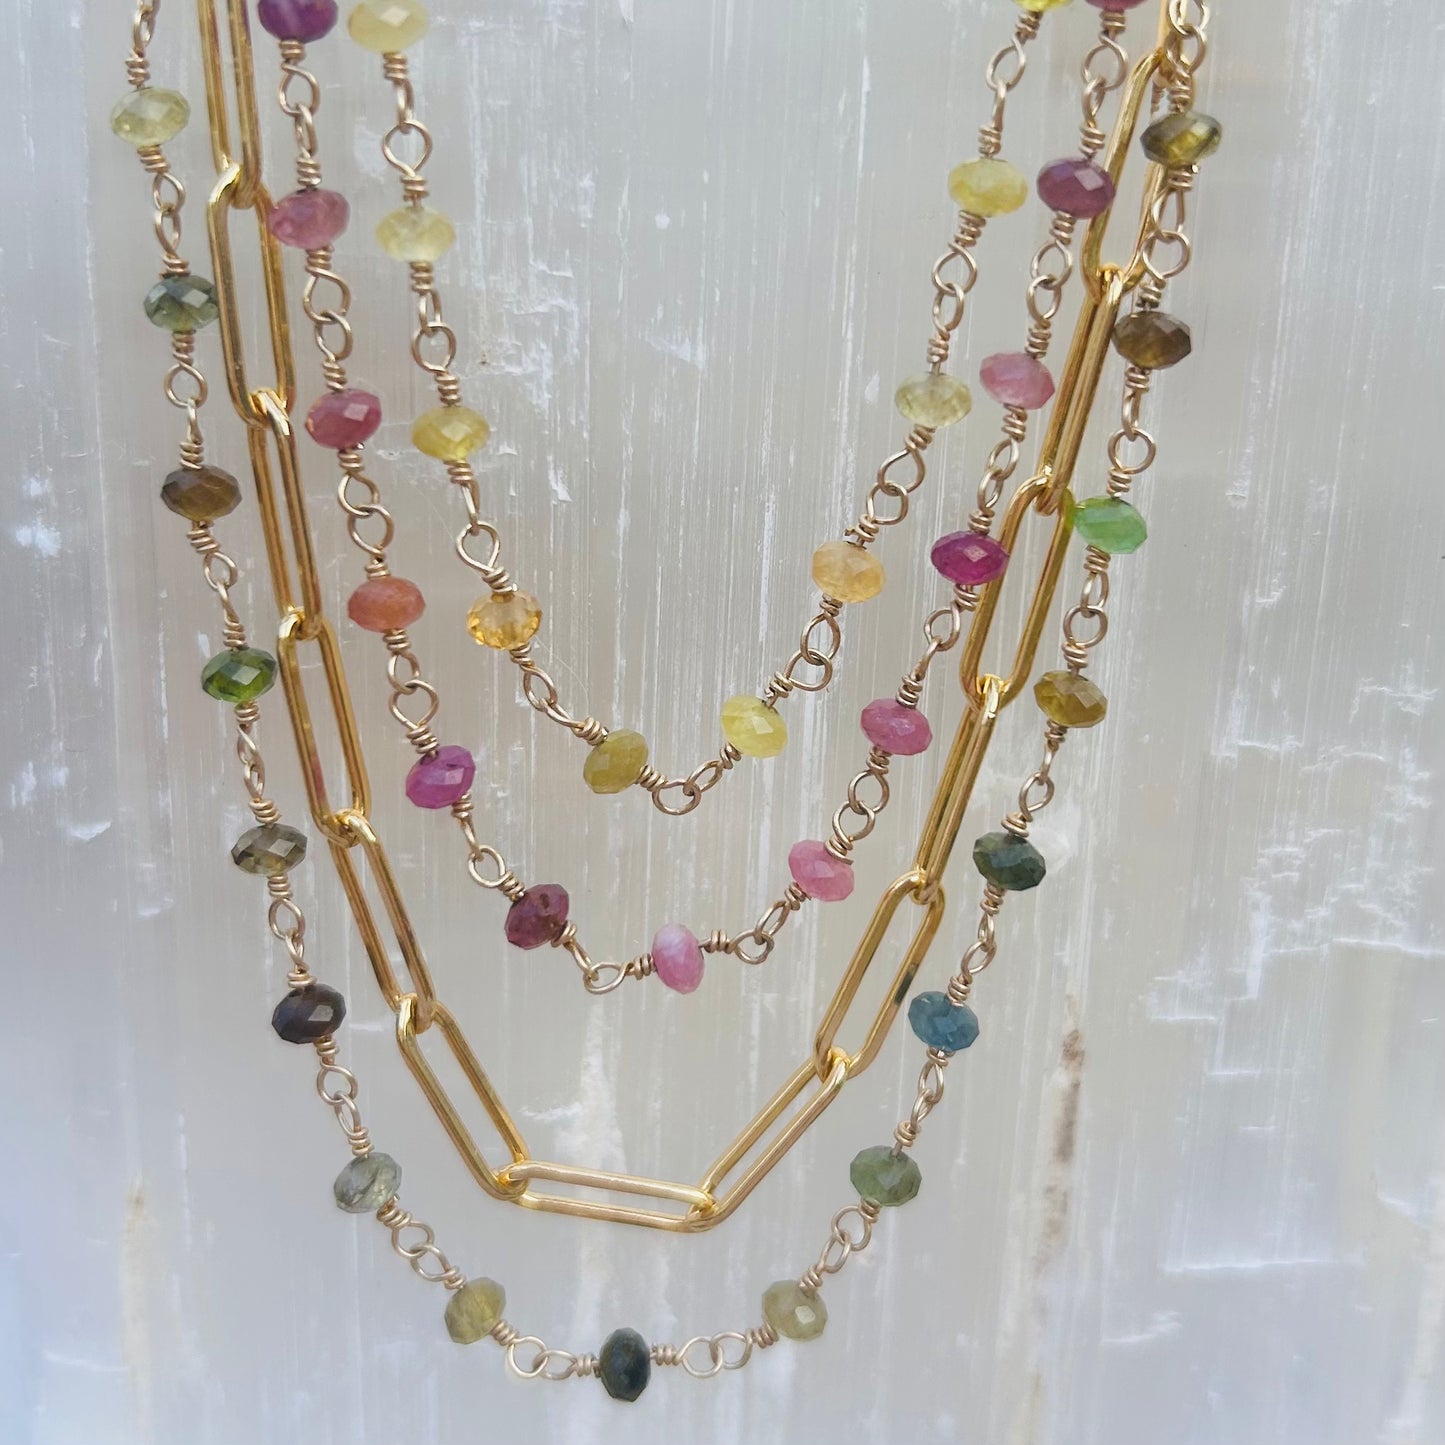 Gemstone Rosary Necklace ~ Pink Tourmaline